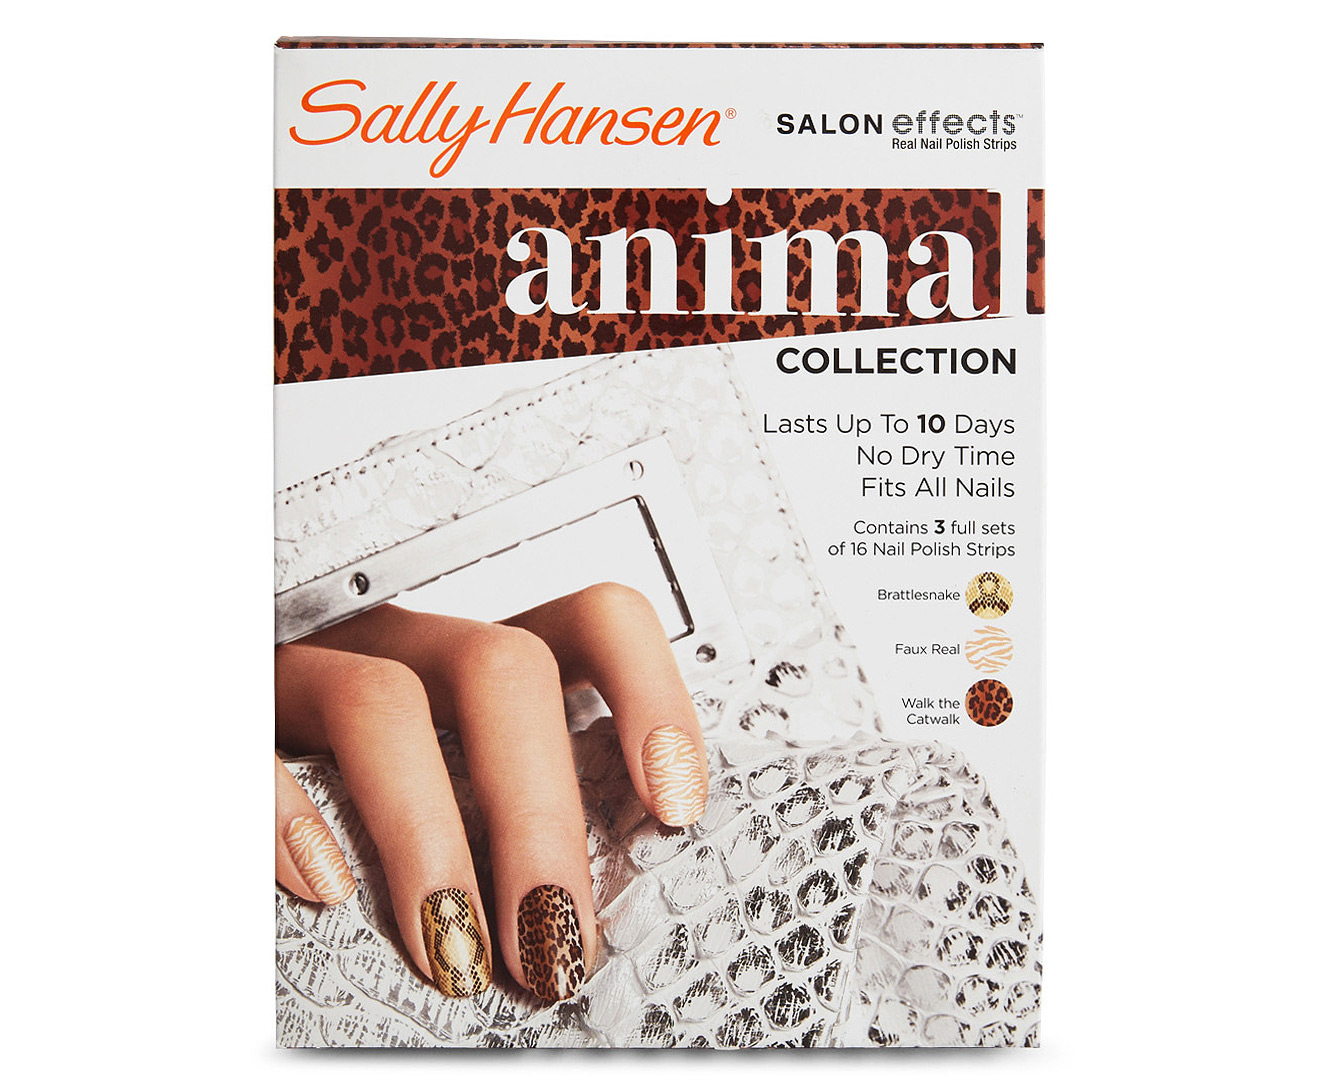 1. Sally Hansen Salon Effects Real Nail Polish Strips - wide 3